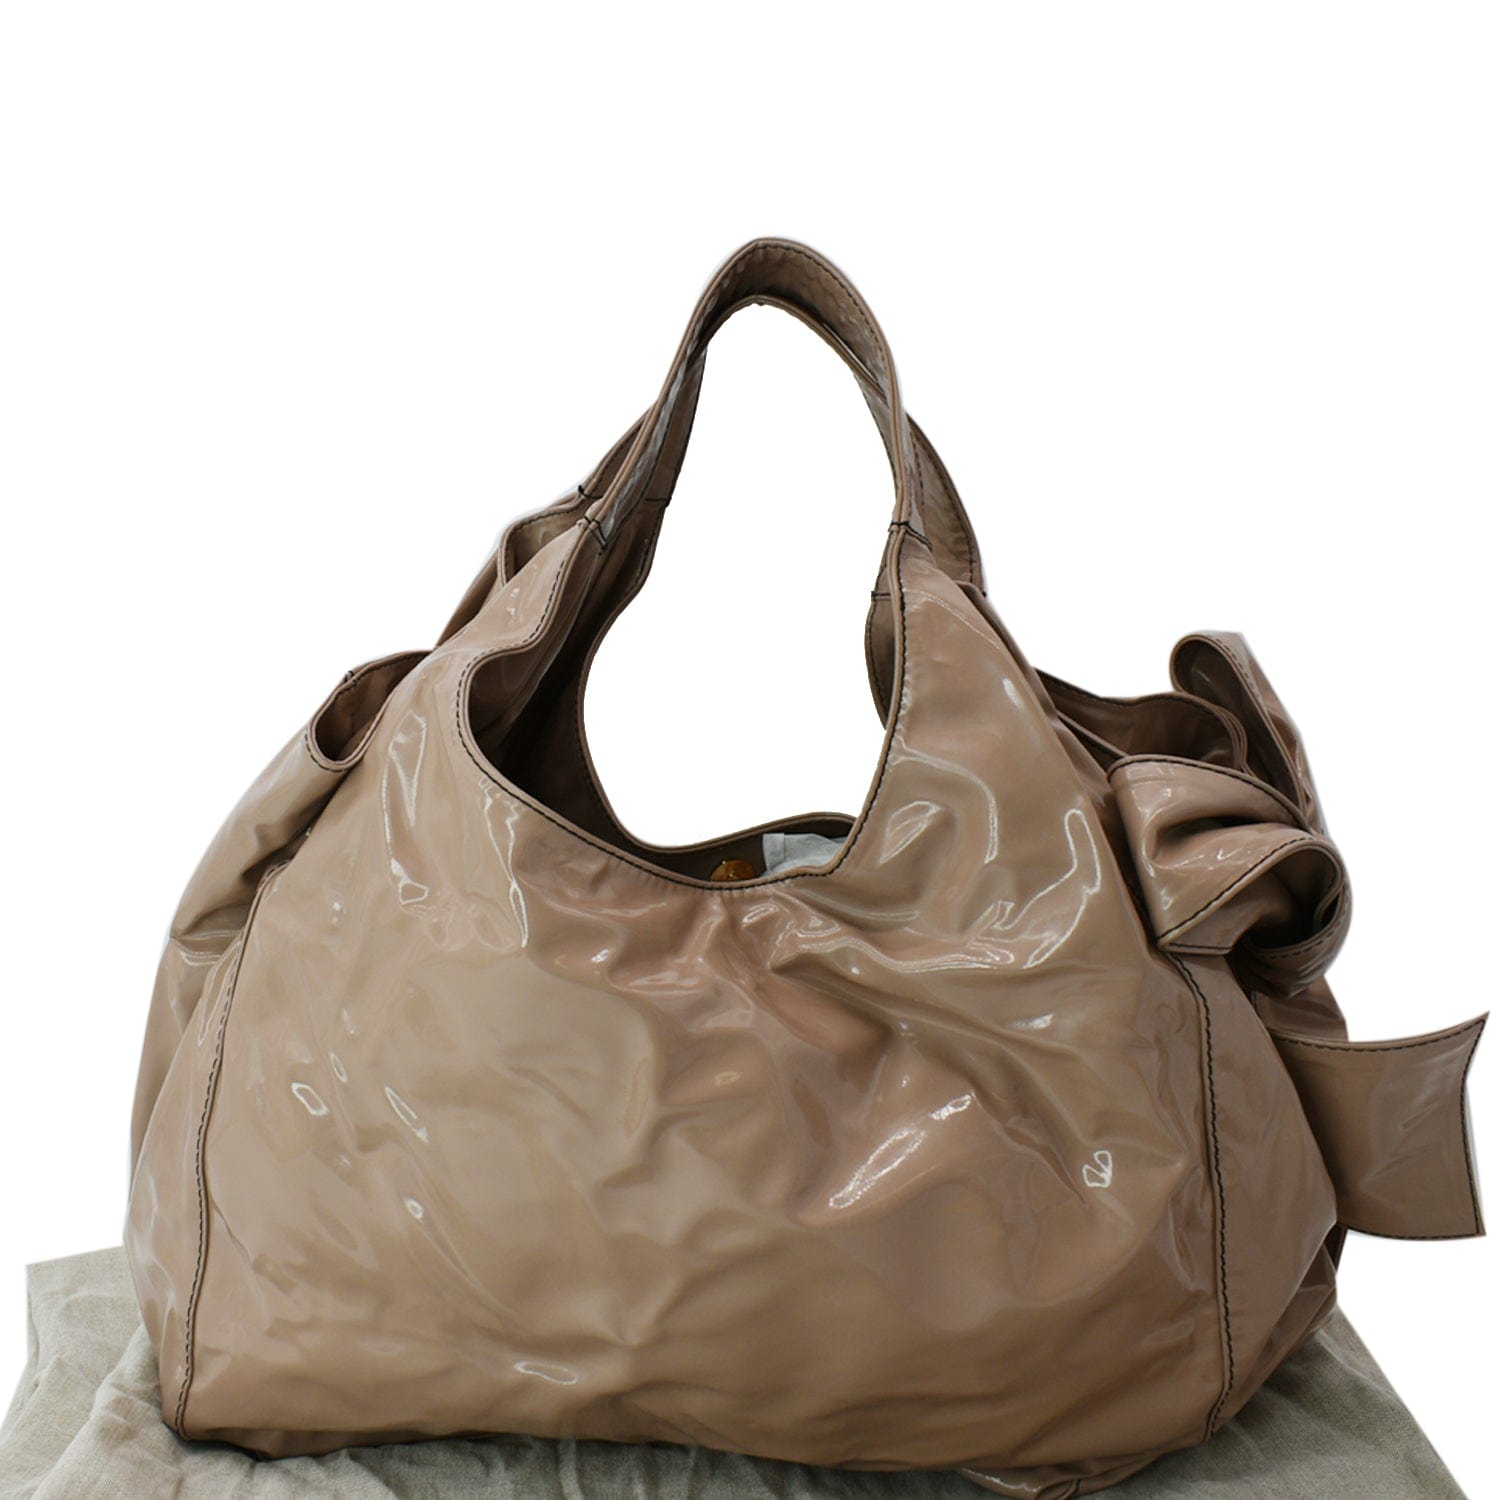 VALENTINO GARAVANI Black Patent Leather Handbag #29104 – ALL YOUR BLISS